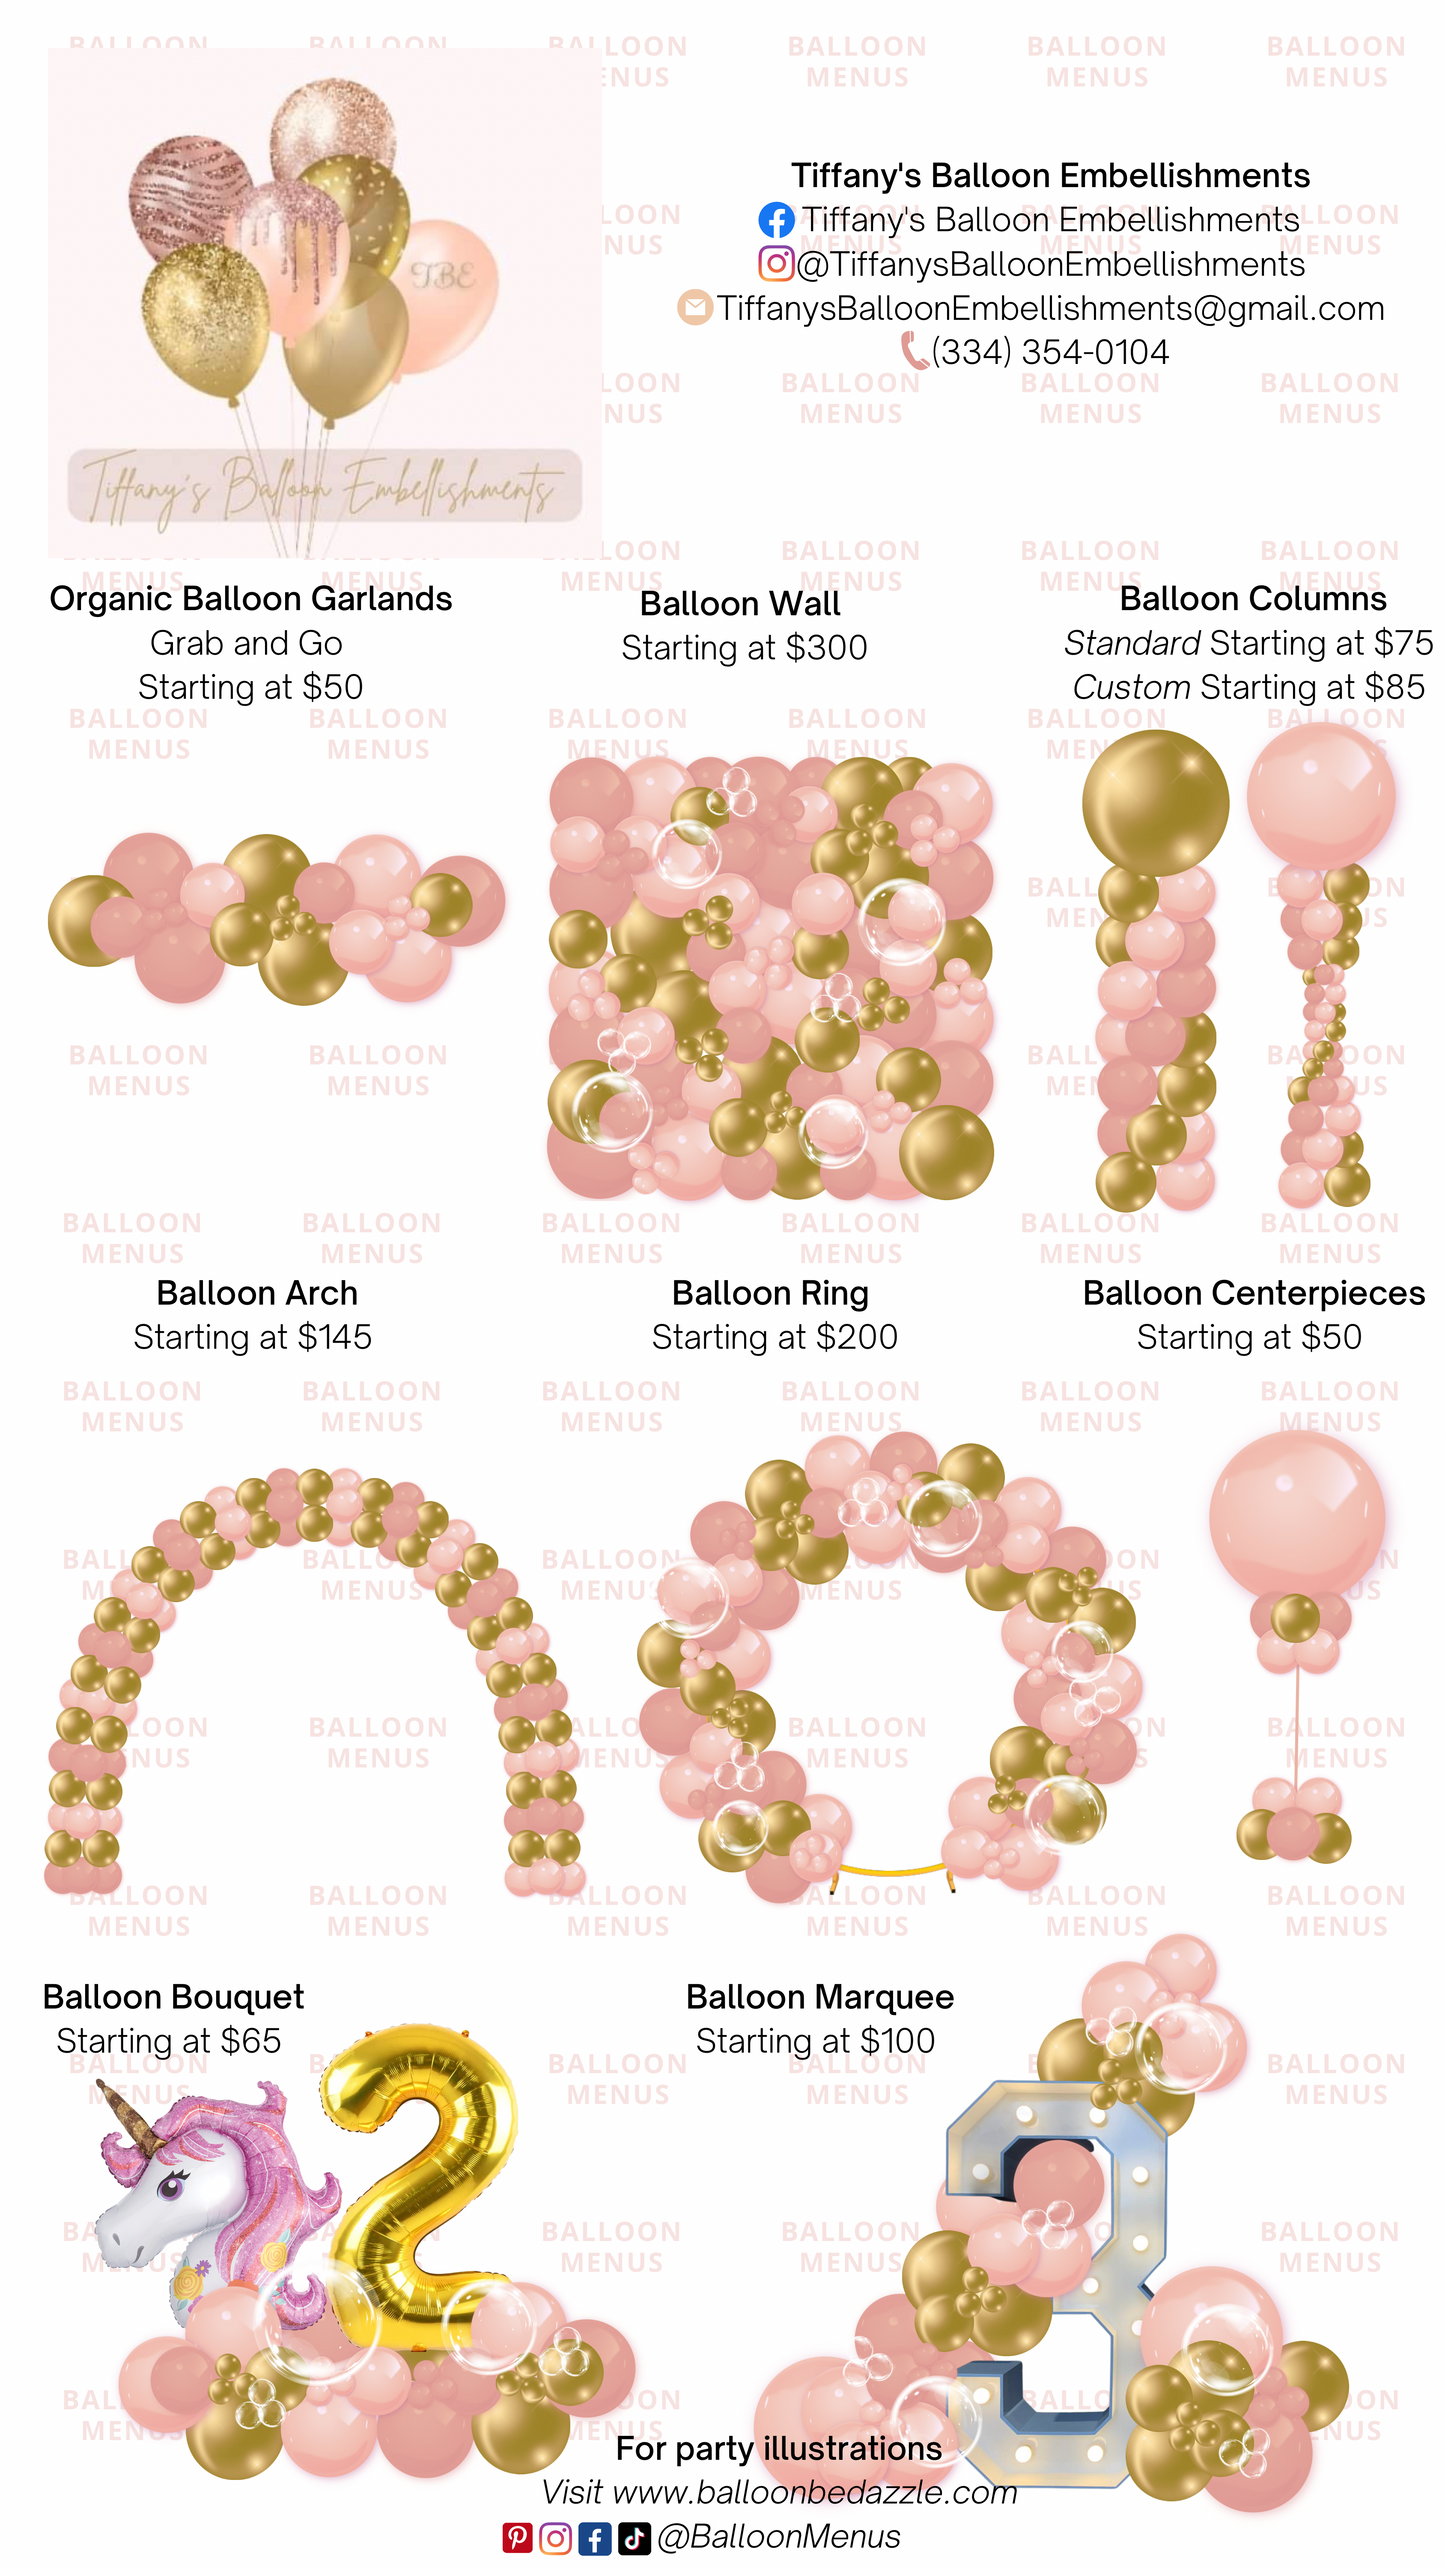 Tiffany’s Balloon Embellishments - Client Balloon Menu